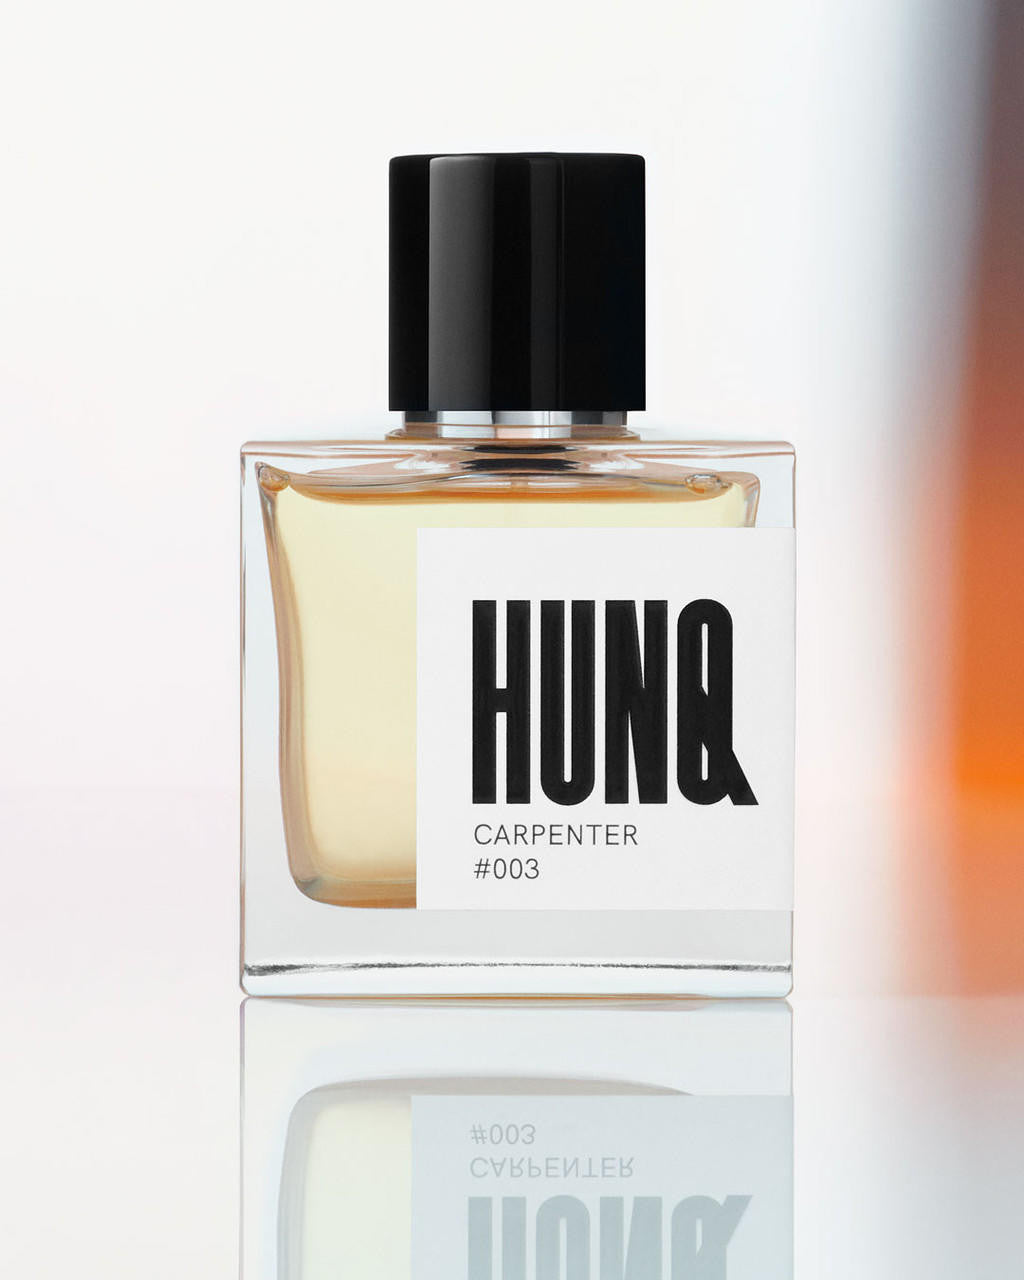  HUNQ #003 Carpenter Eau de Parfum 